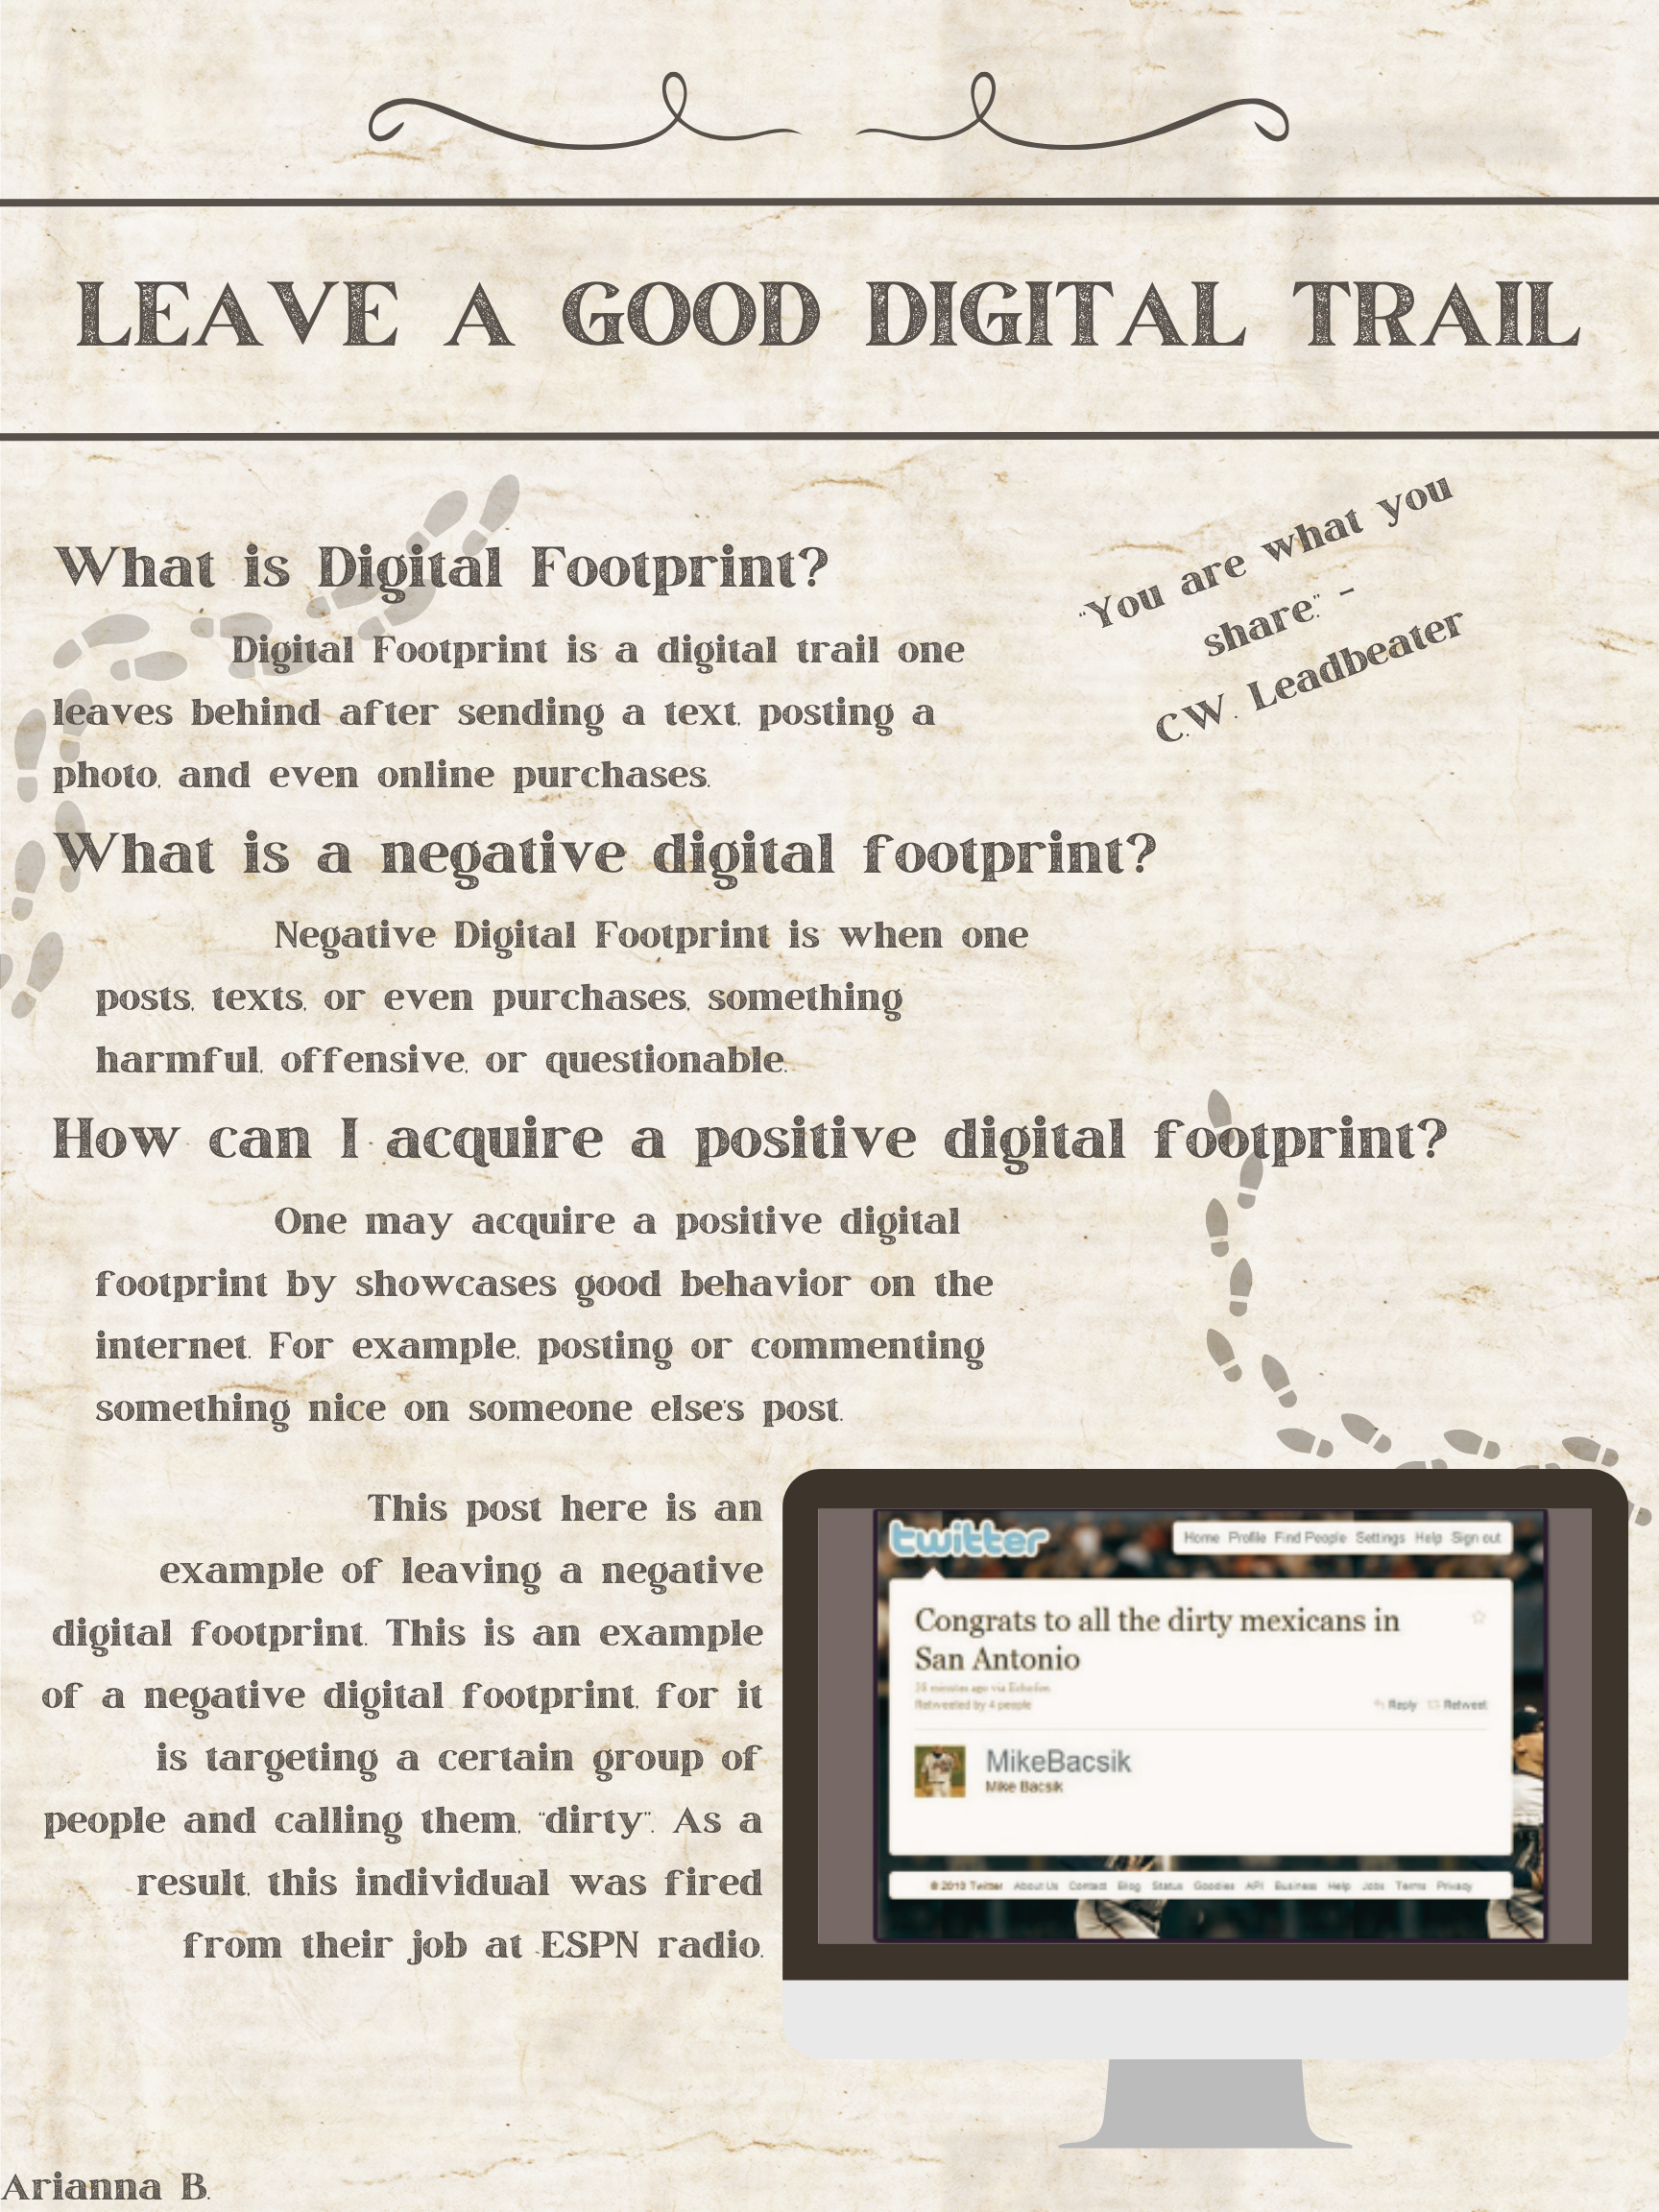 Digital Footprint Poster - Arianna B